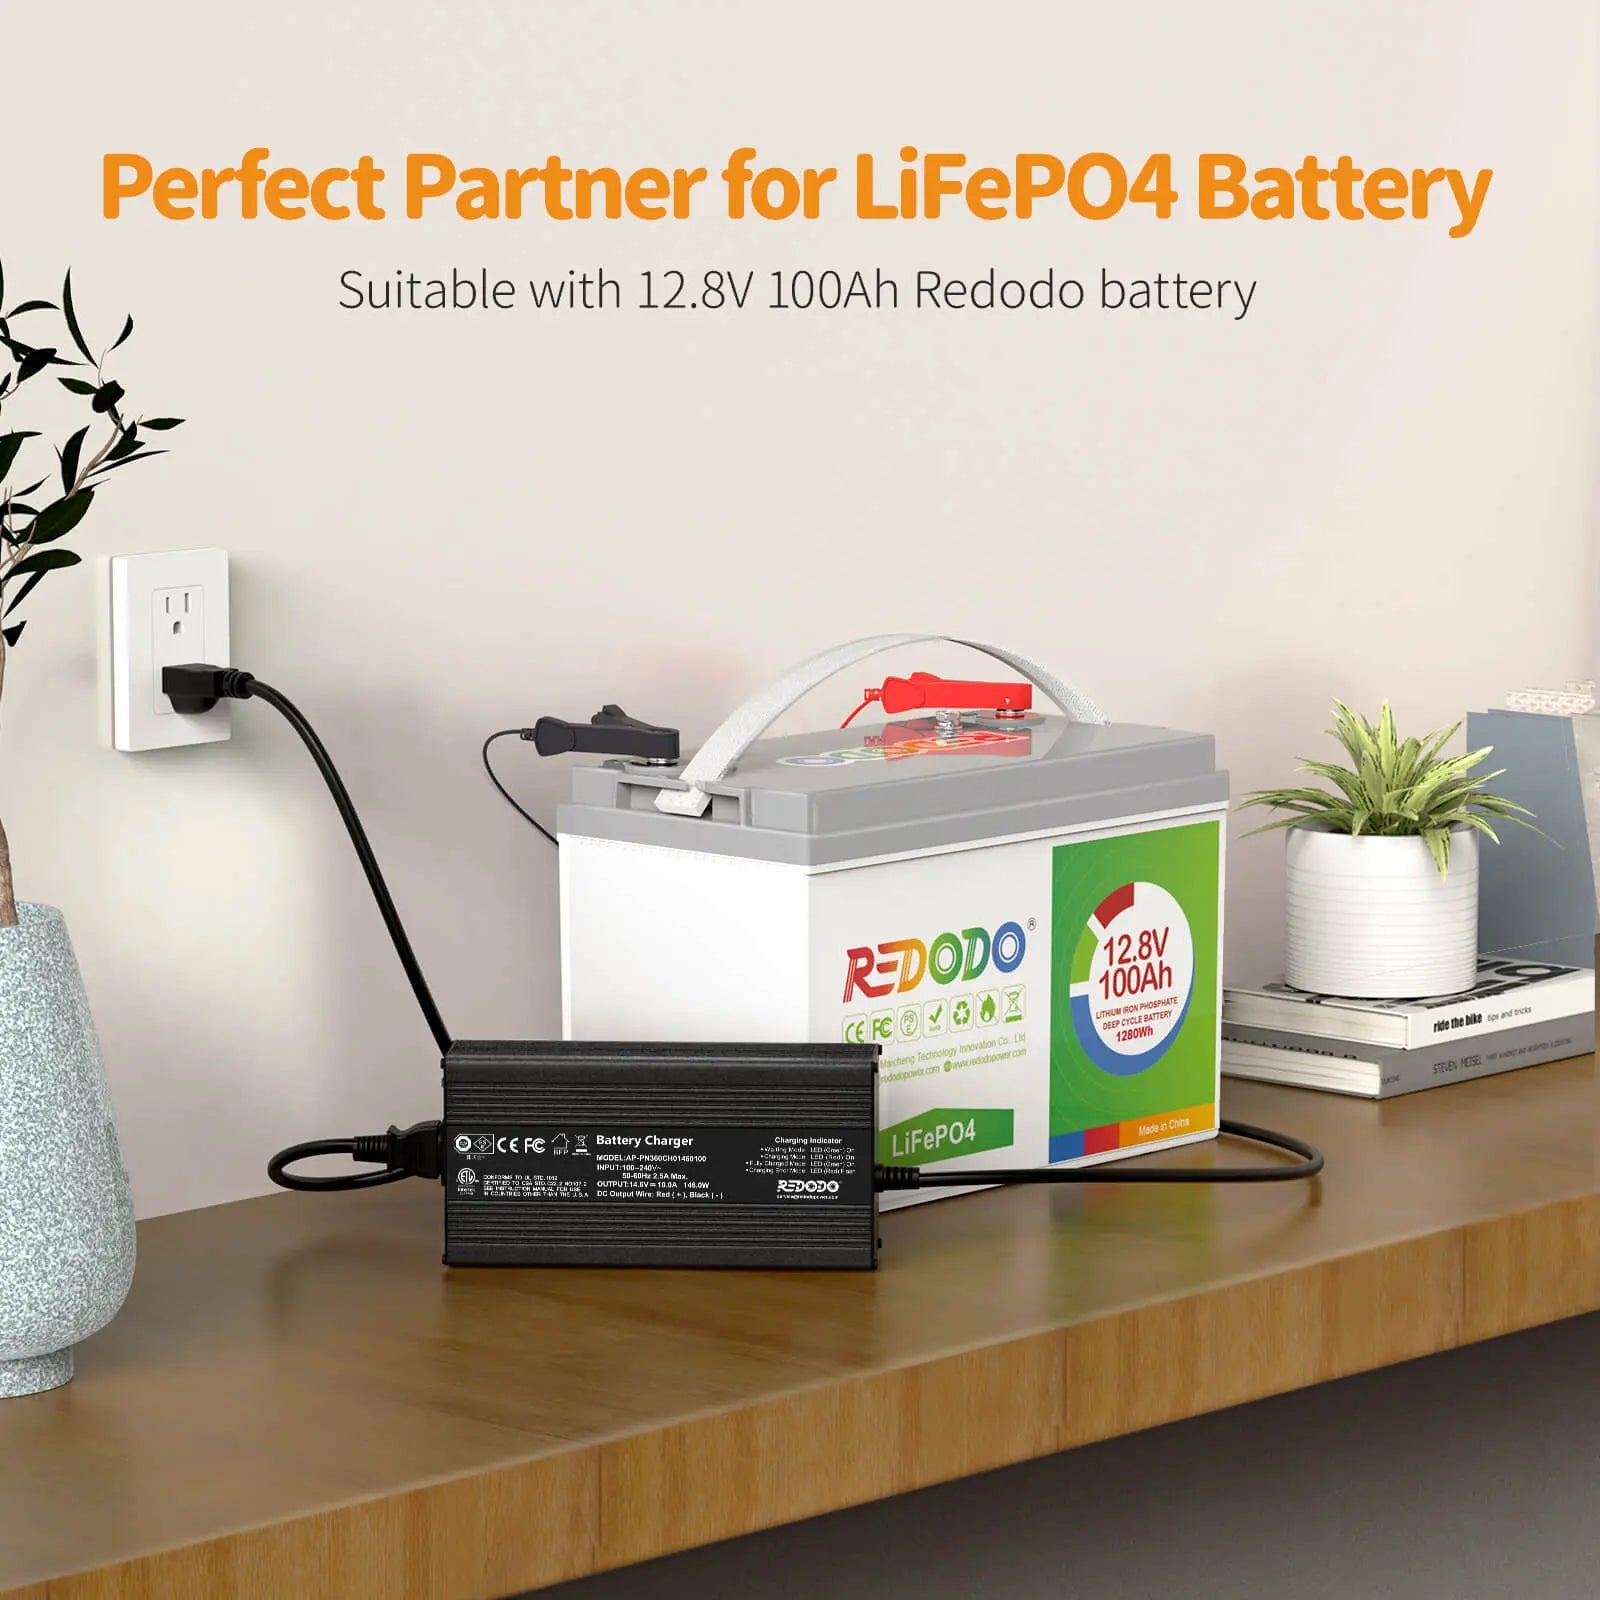 Redodo 14.6V 10A LiFePO4 Battery Charger